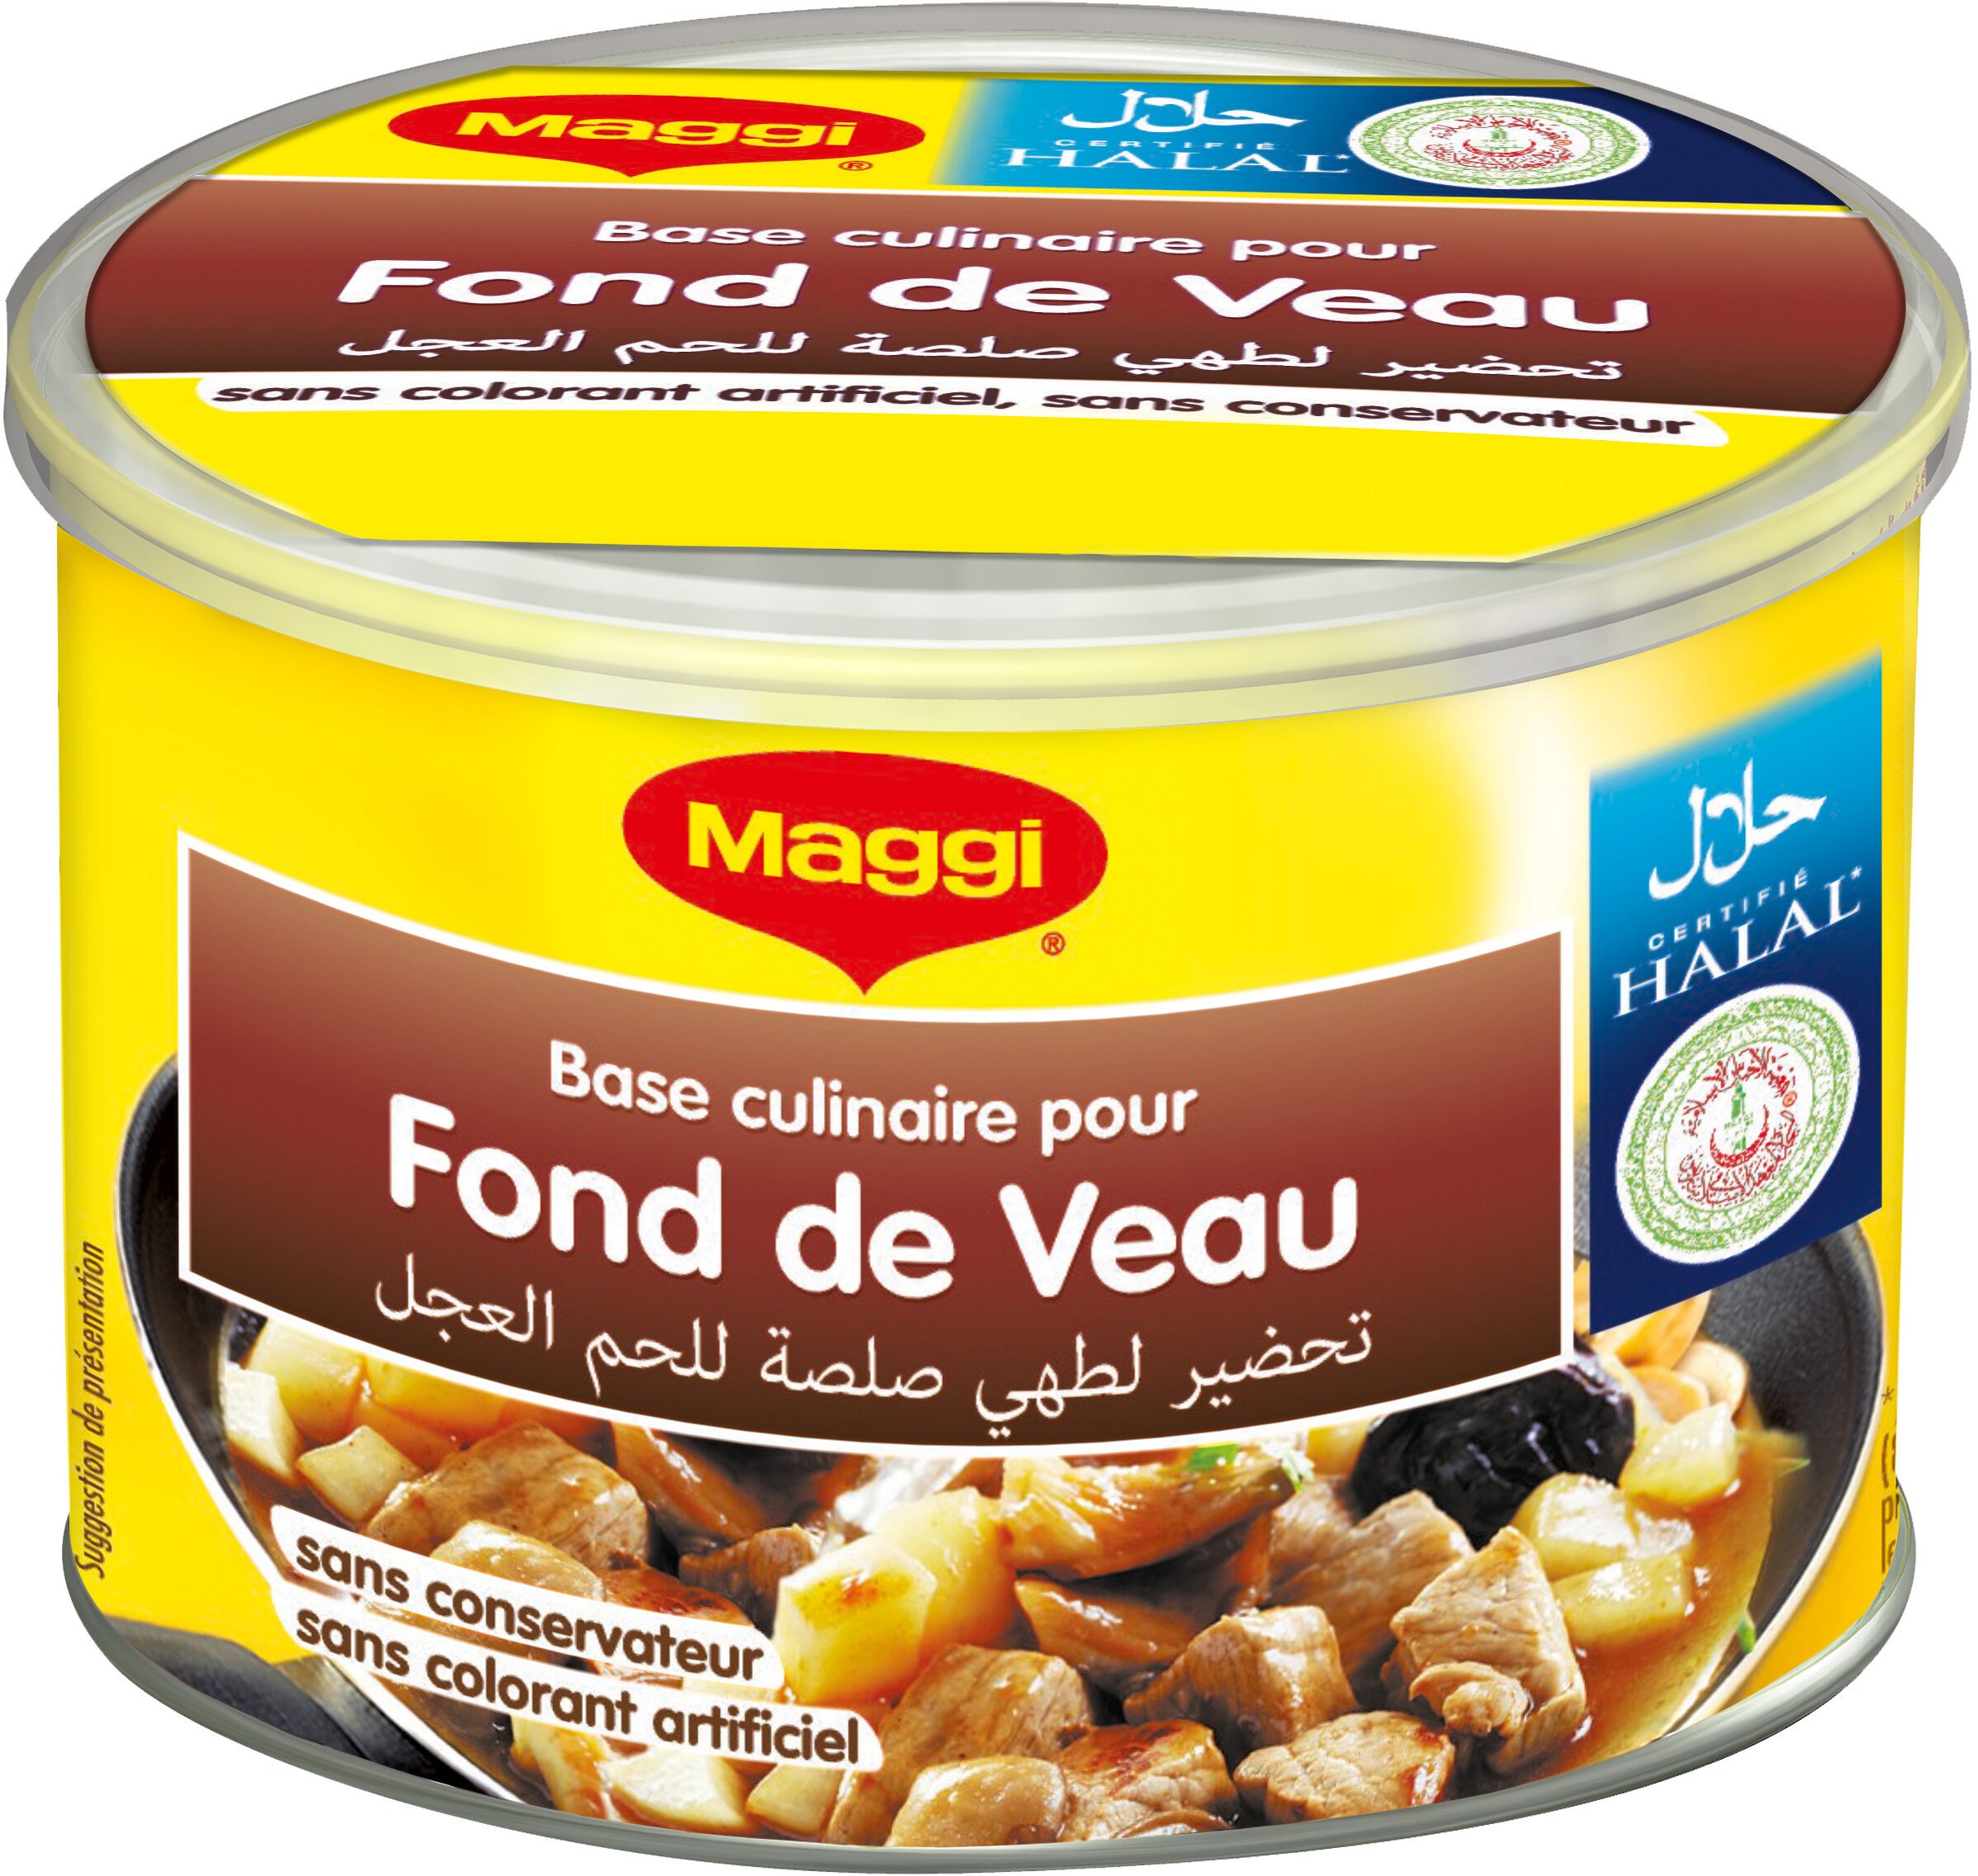 MAGGI Fond de Veau Halal boîte 110g - Product - fr